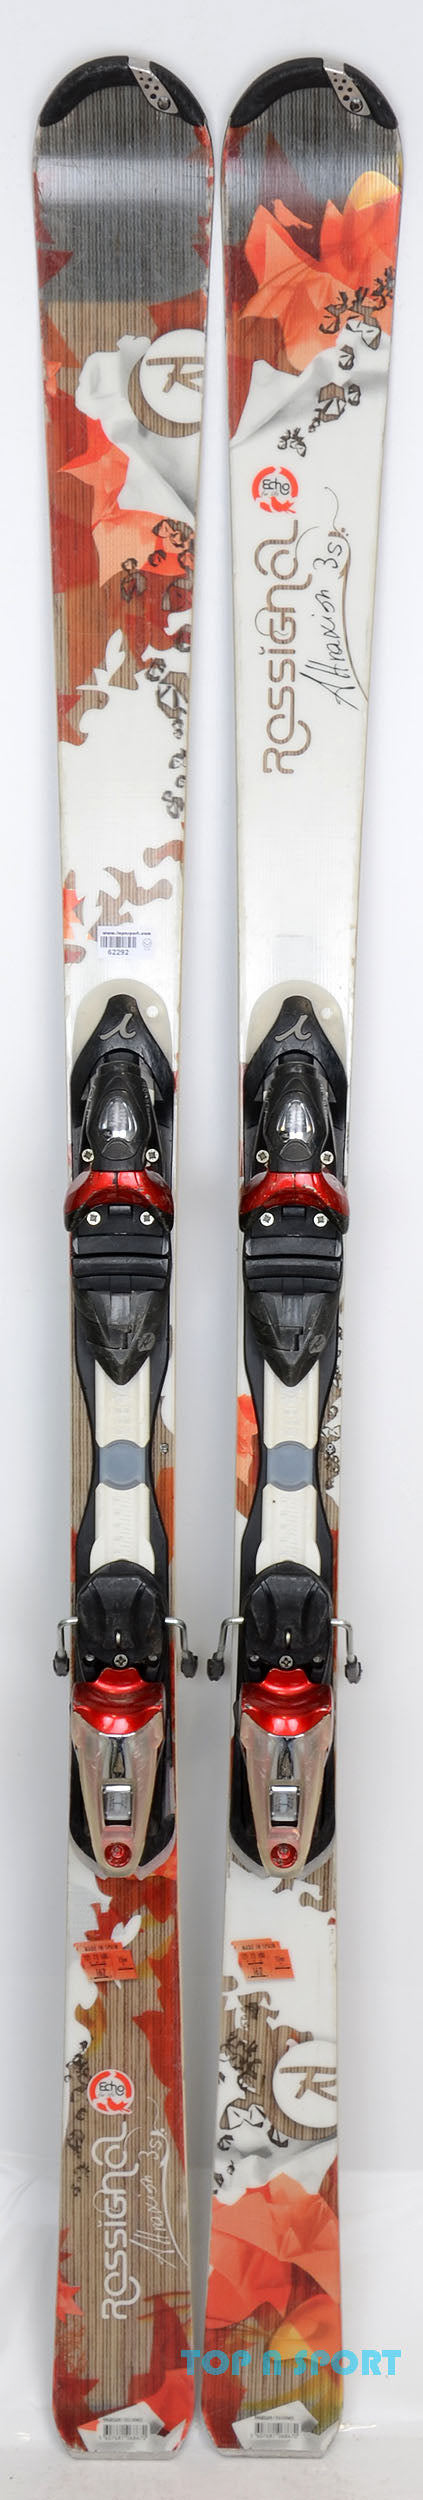 Rossignol ATTRAXION 3 S ECHO - skis d'occasion Femme